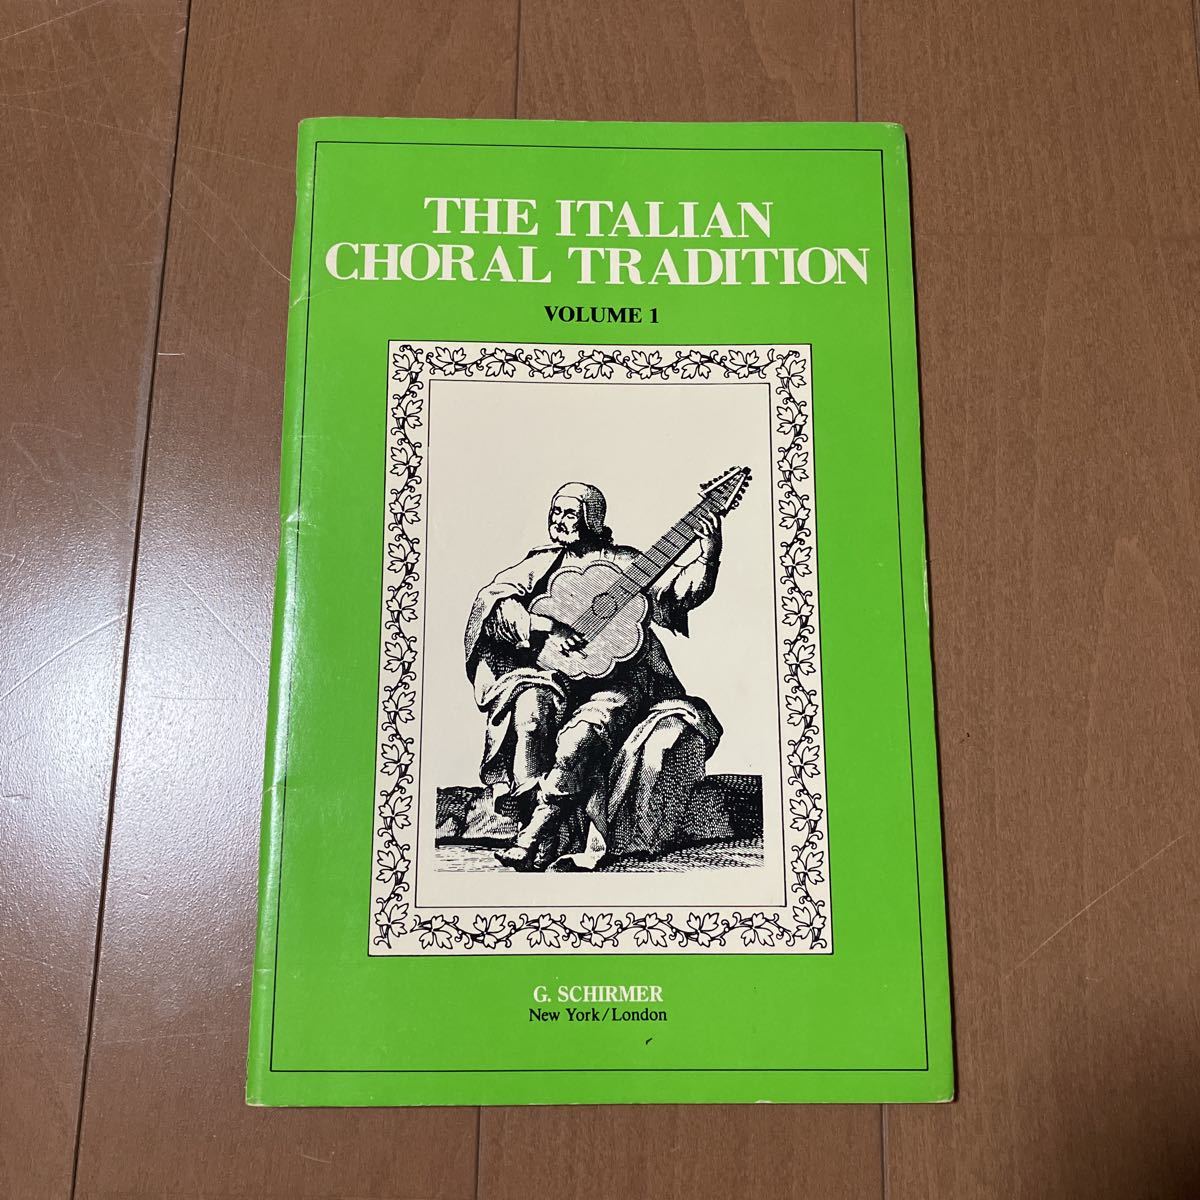  musical score kola-ru collection vol.1*The Italian Choral Tradition Volume 1